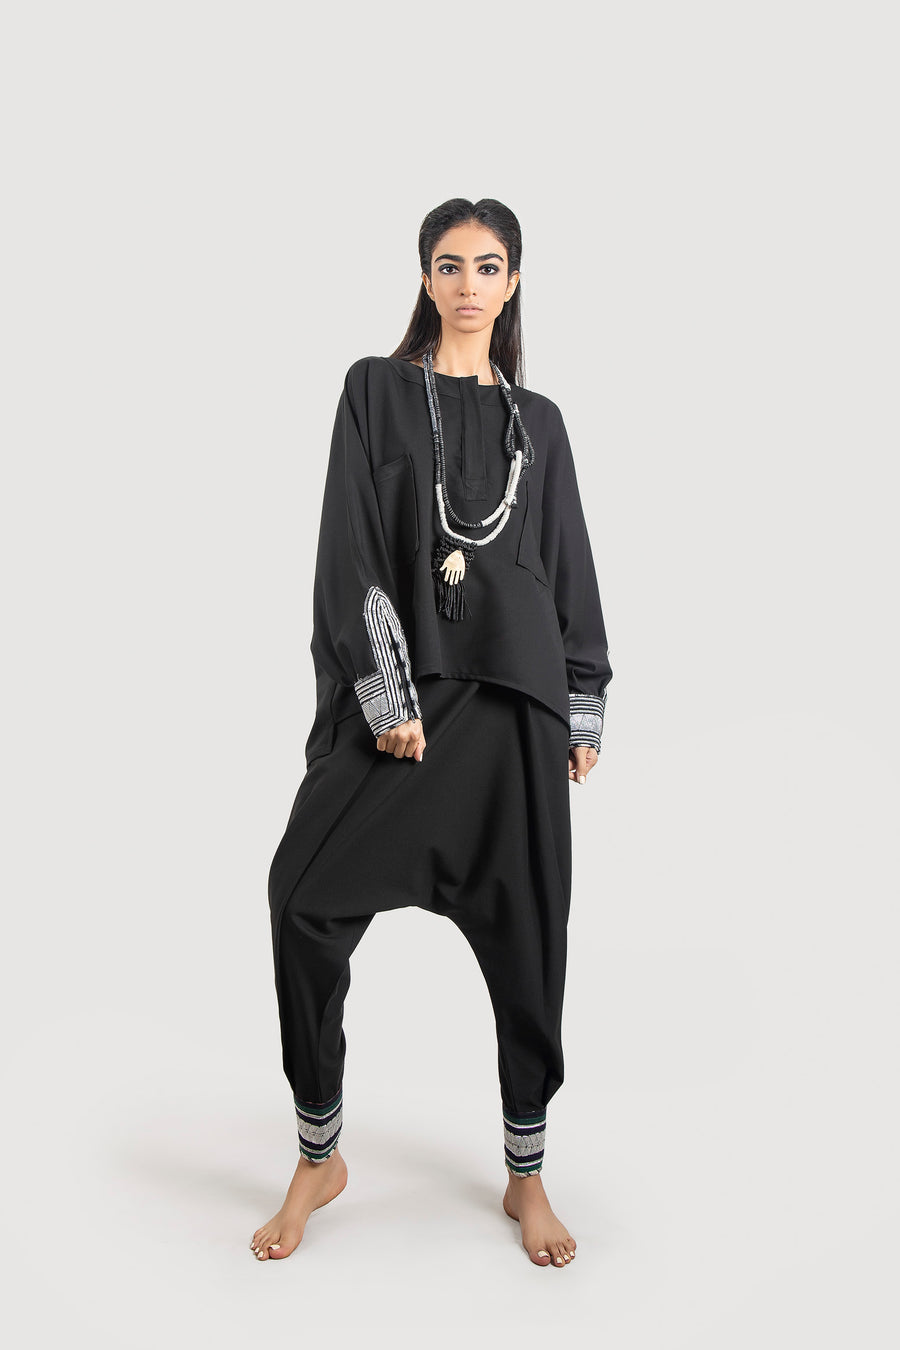 Silver Baluchi Sleeve Black Blouse